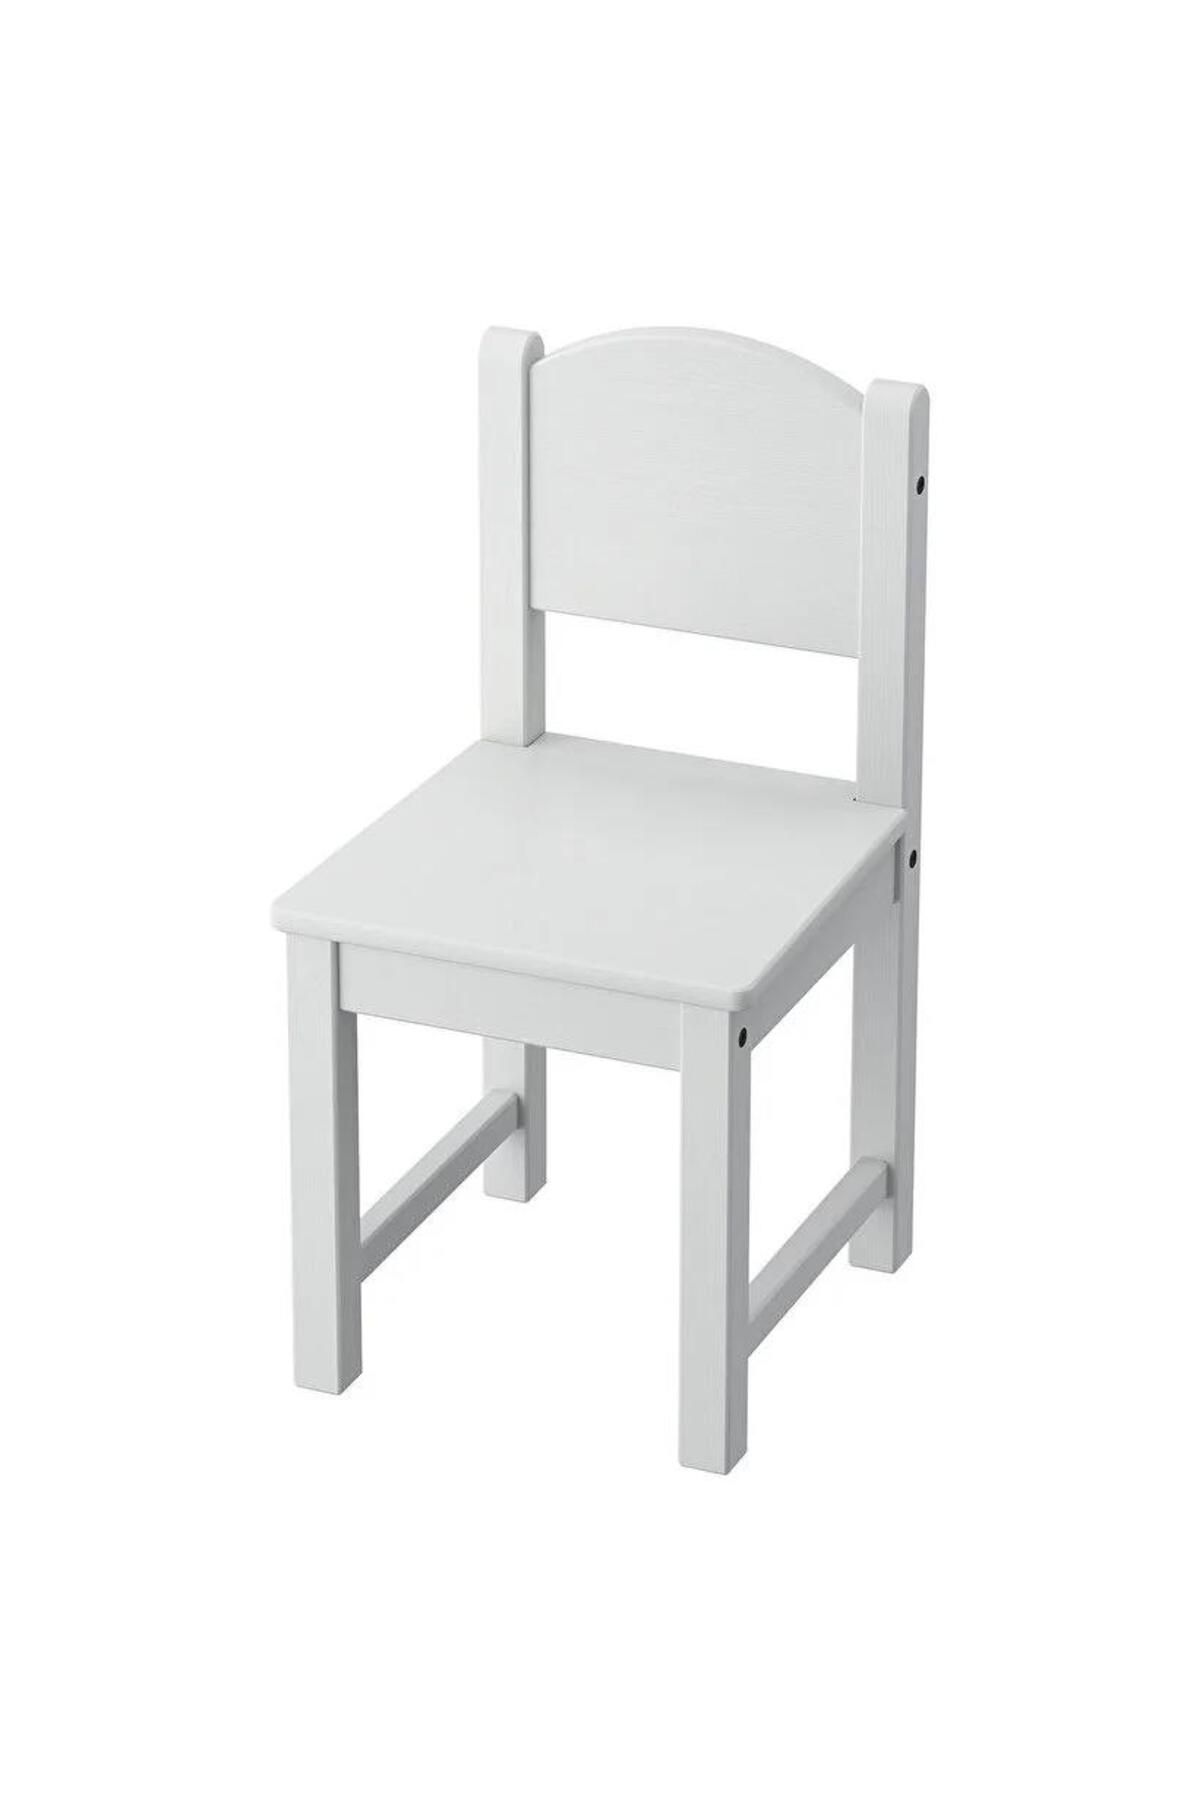 IKEA Gri Sundvik Ahşap Çocuk Sandalyesi Gri 1 Adet Ahşap Sabit Modern Sabit